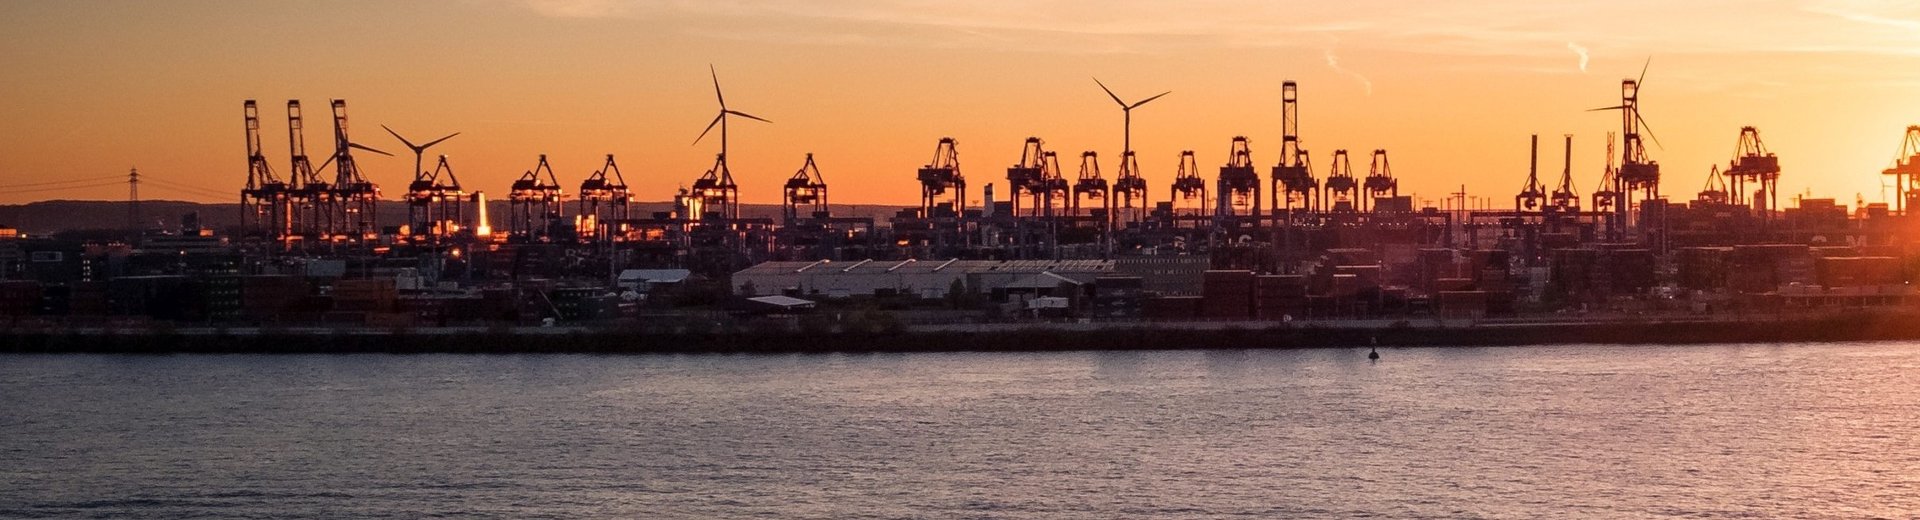 Hamburger Hafen bei Sonnenuntergang Marktplatzkomplizen